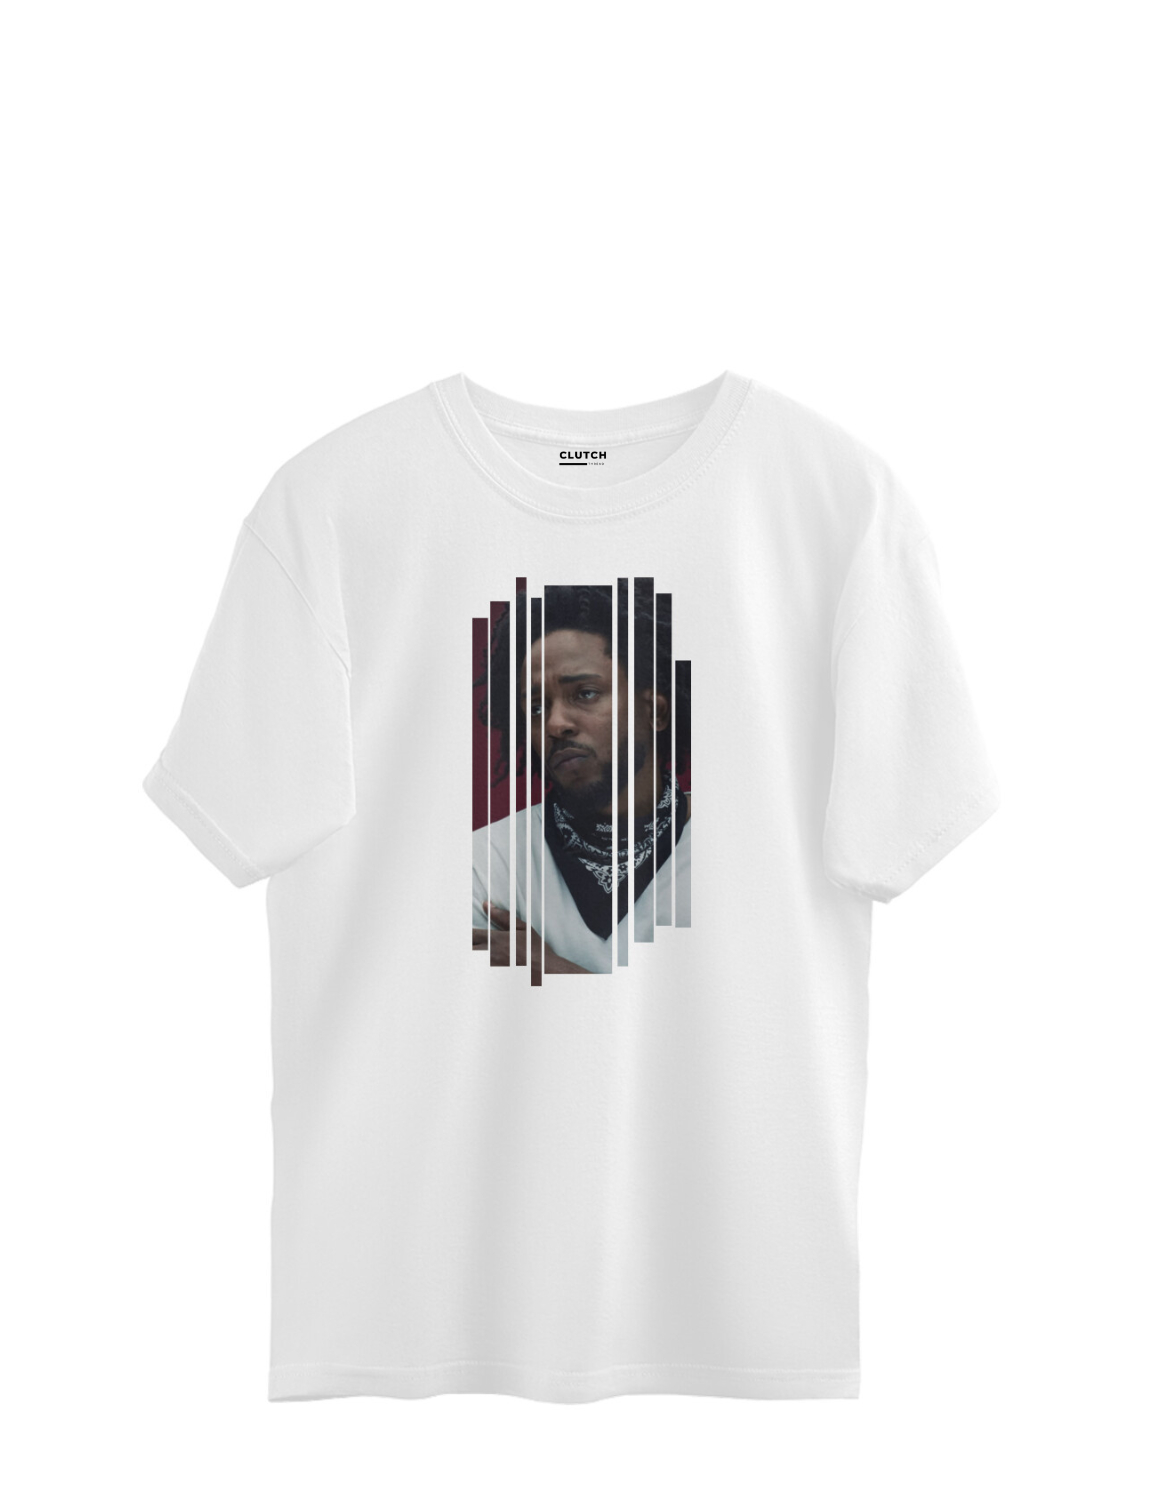 Kendrick Lamar| Oversized T-Shirts